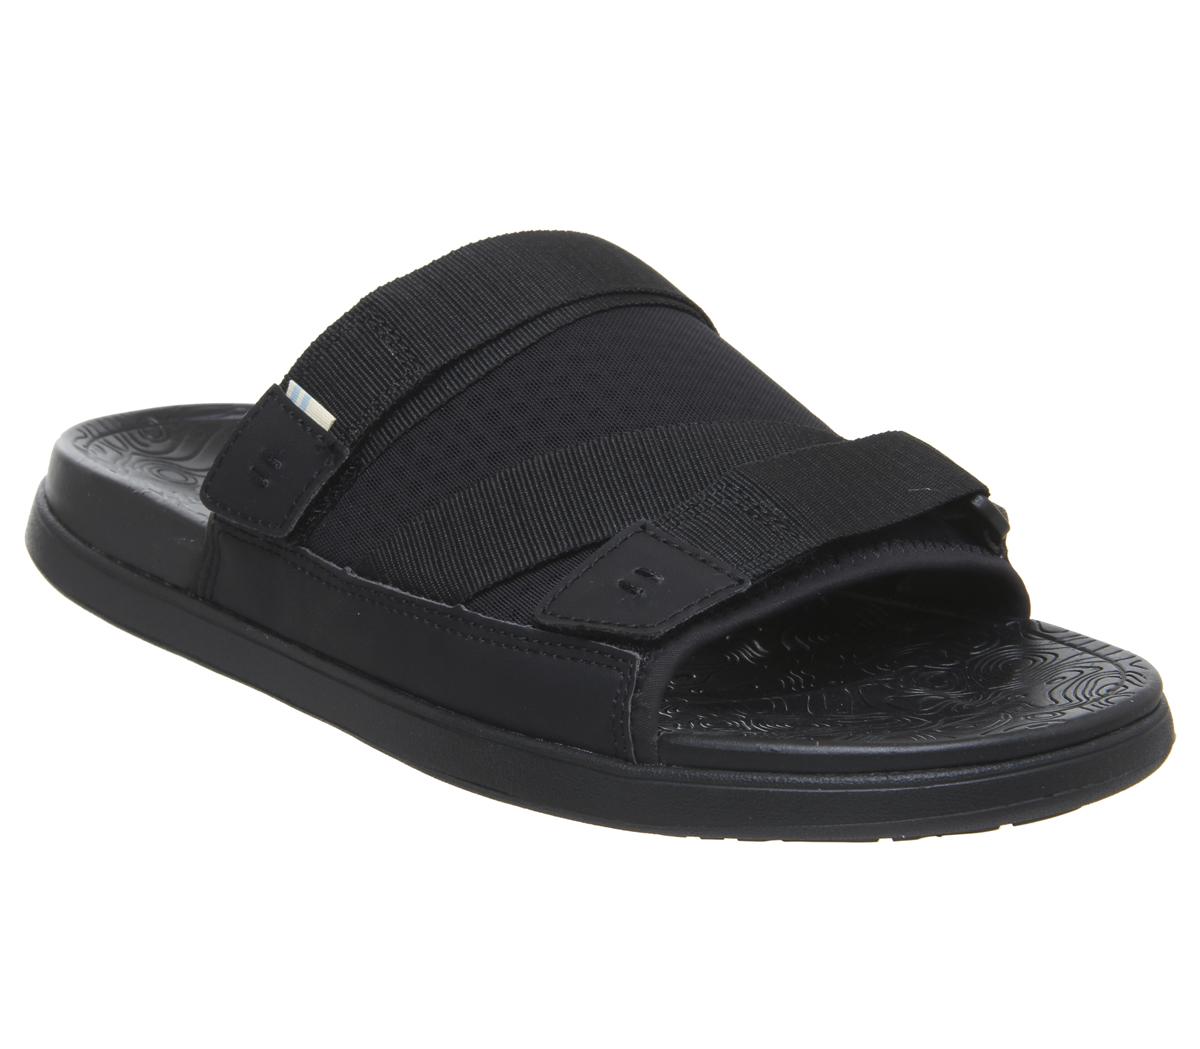 Toms Trvl Lite Sandal Black - Men's Sandals